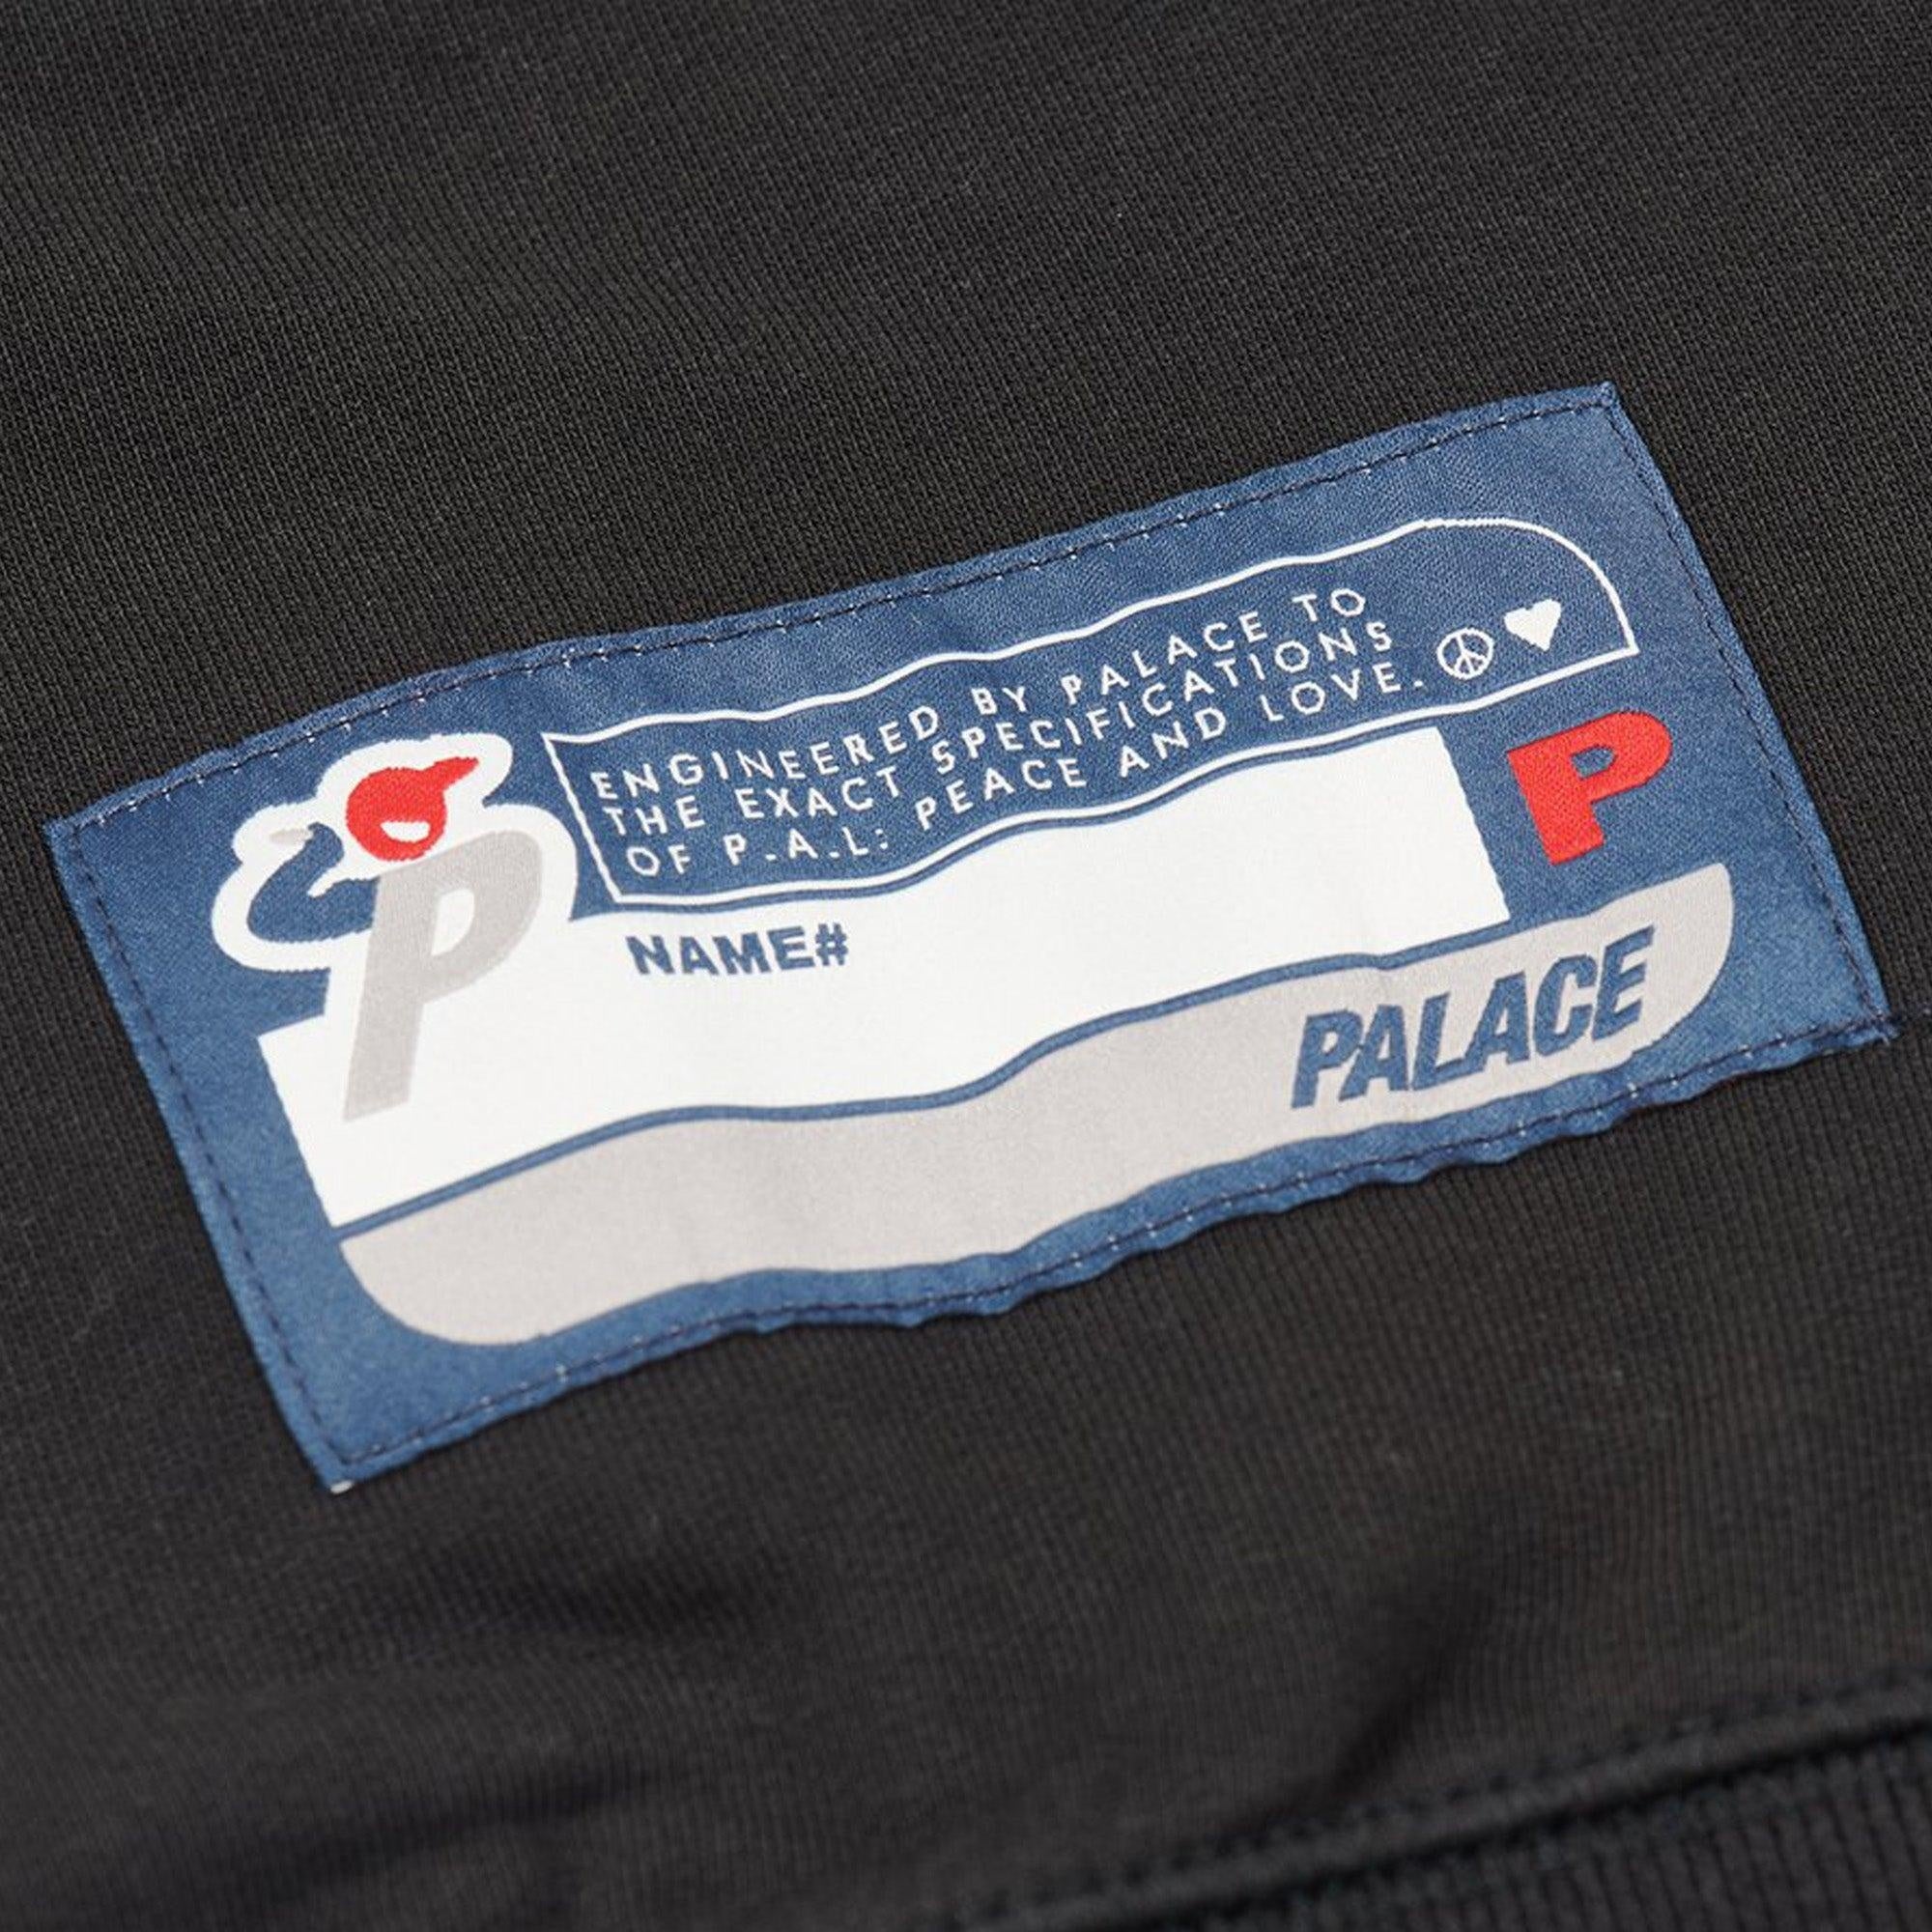 Buy Palace Palace Drop Shoulder College Crew Black Online